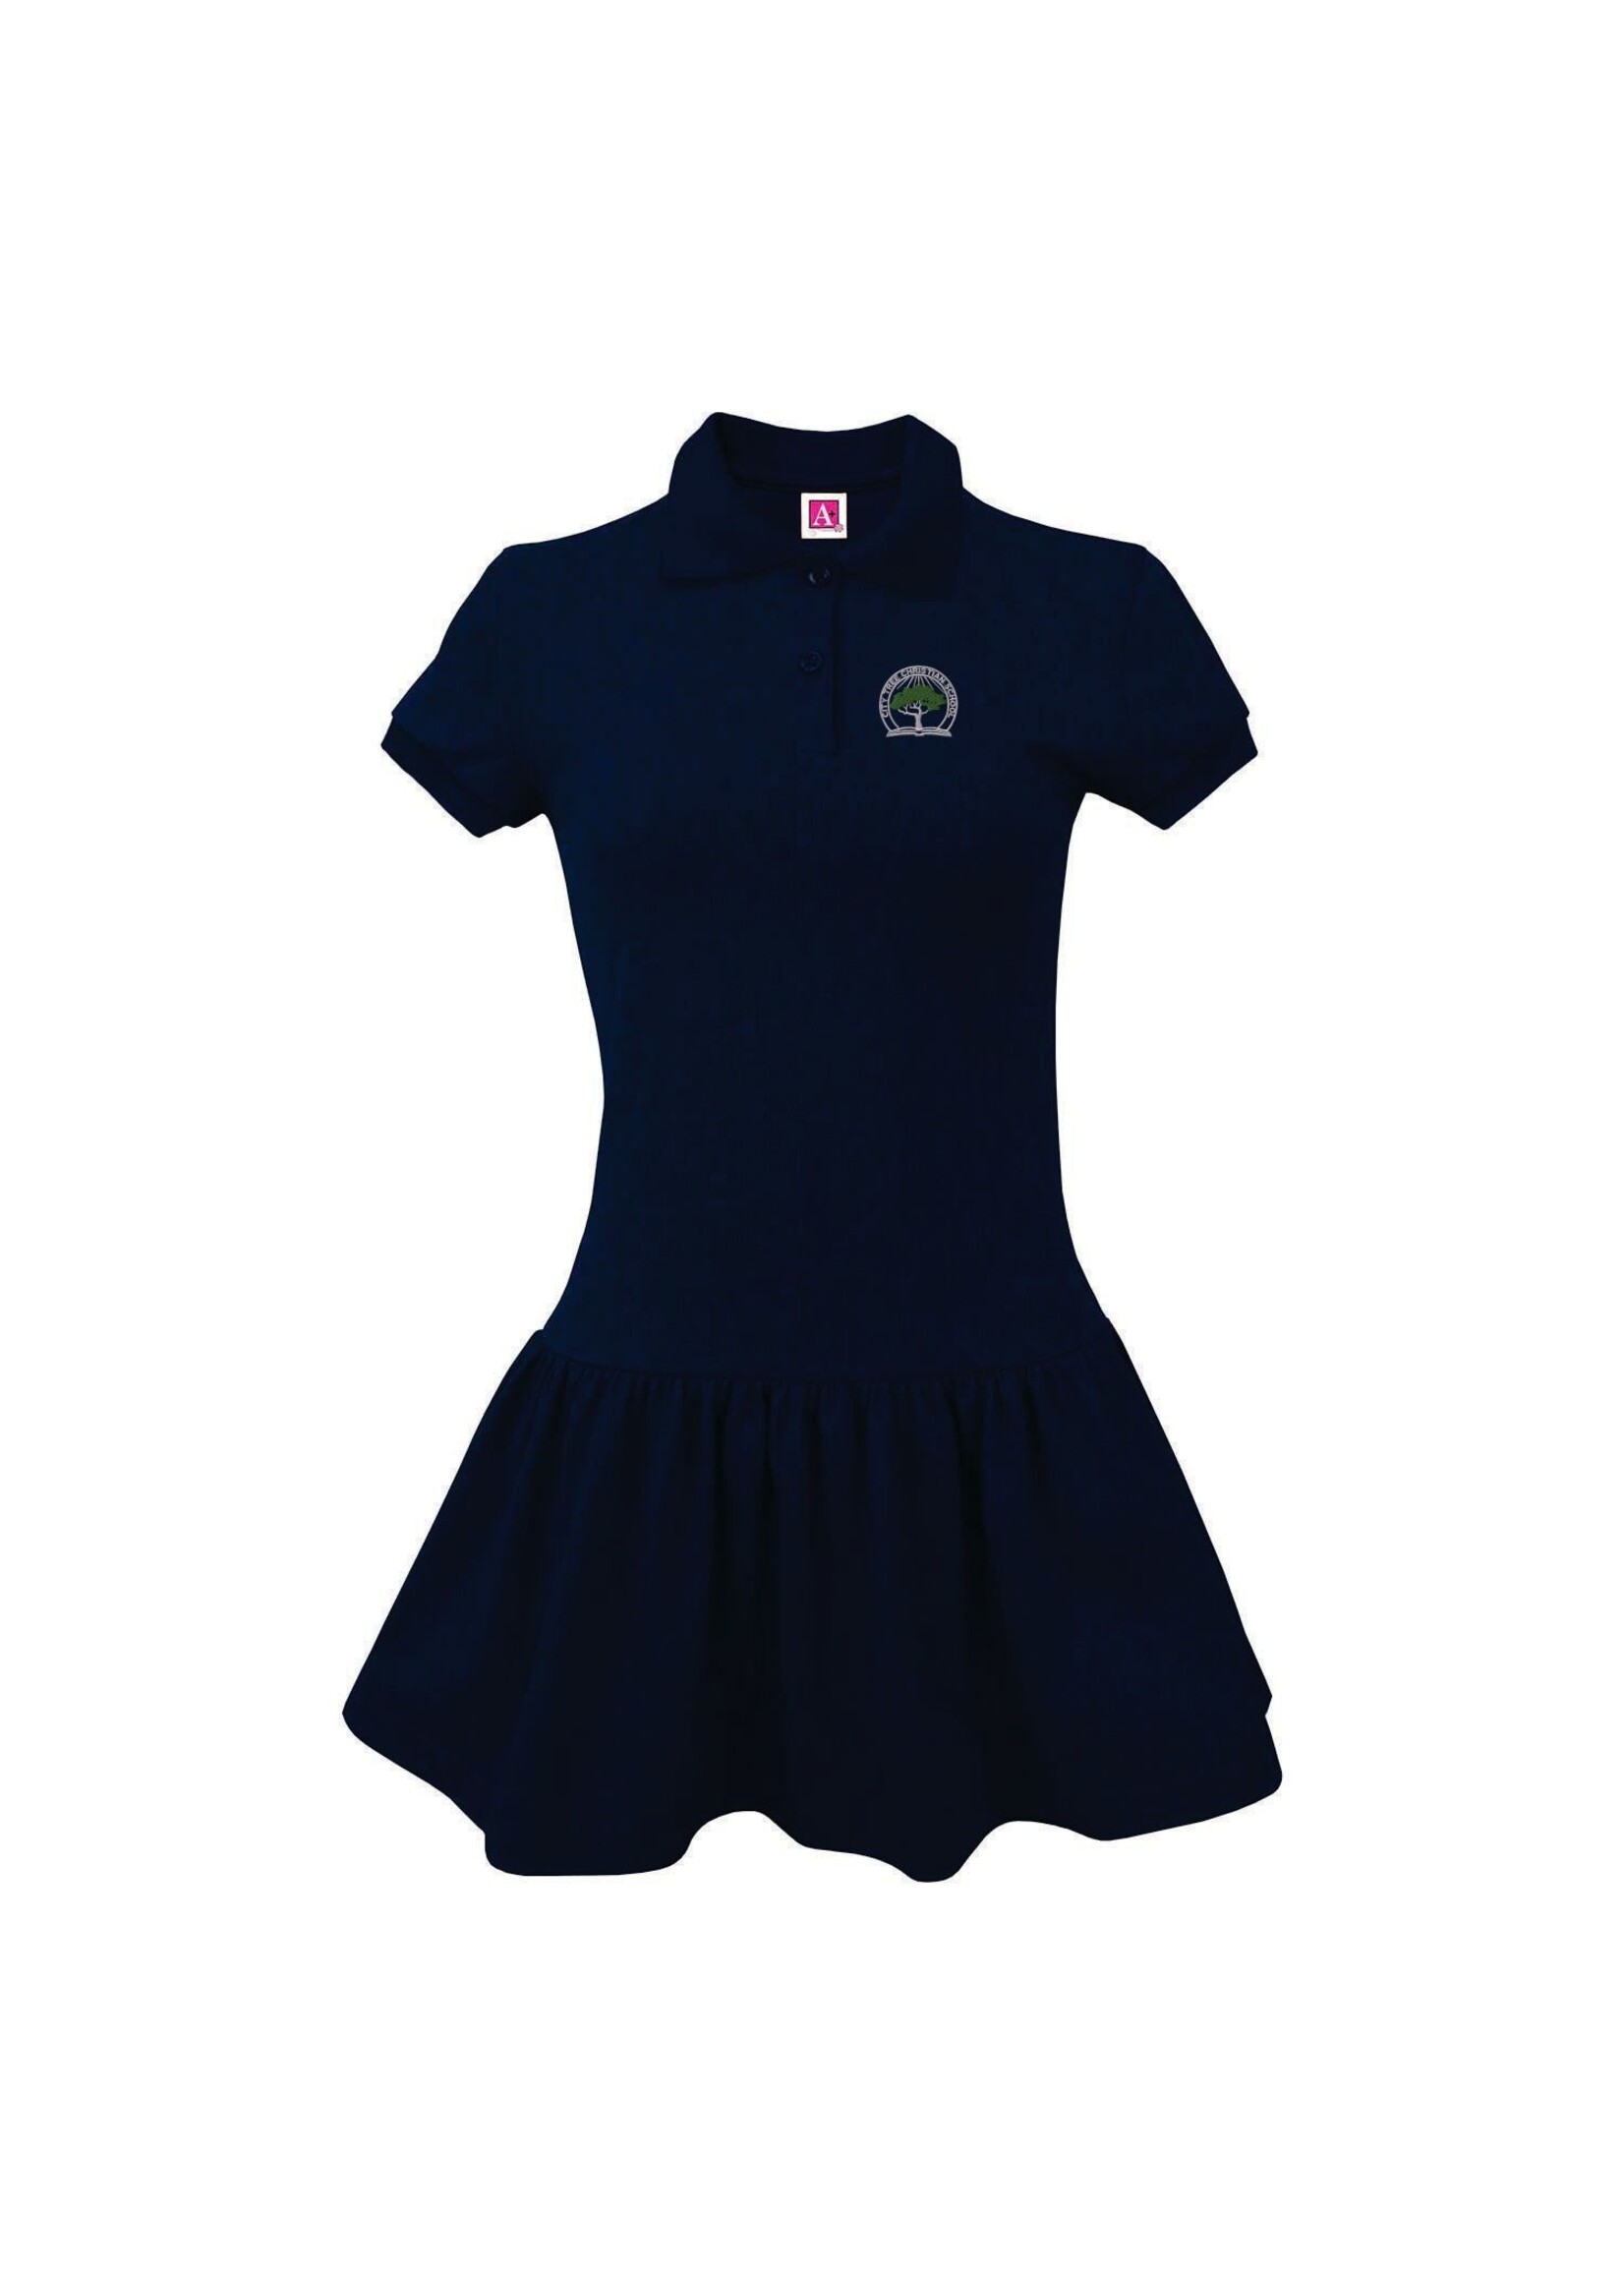 CTCS Jersey Knit Navy Polo Dress